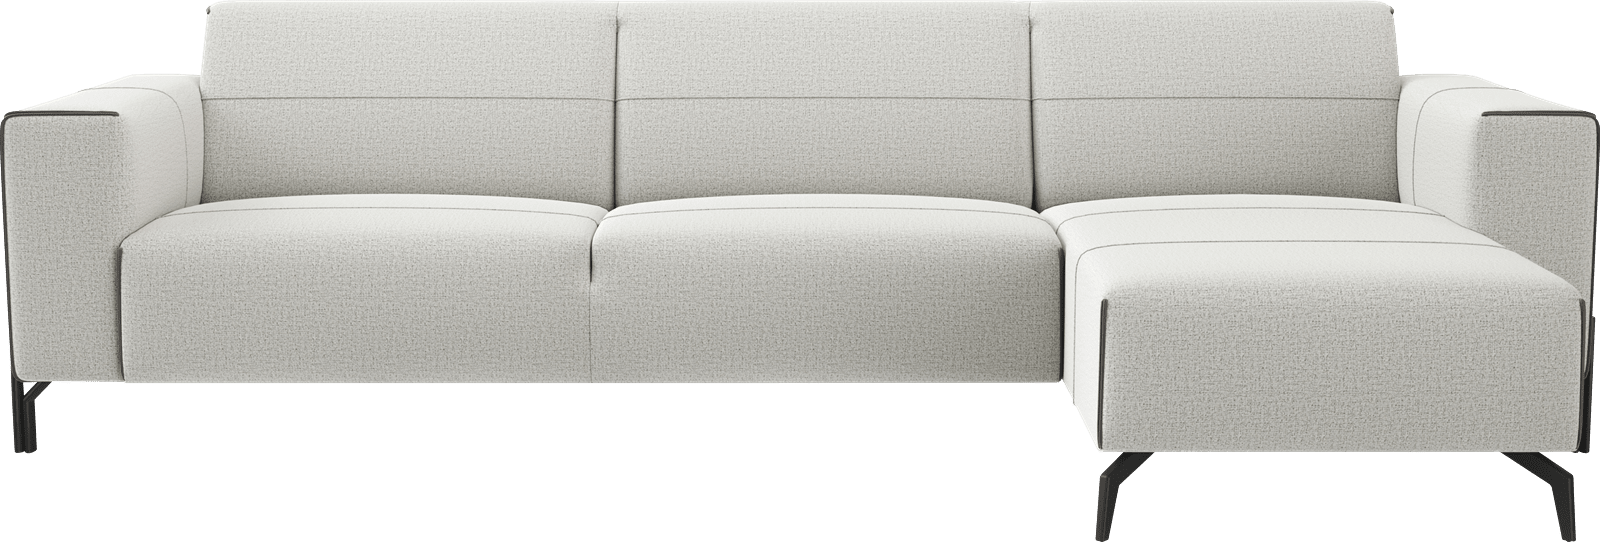 XOOON - Prizzi - Sofas - 2,5 Sitzer Armlehne Links - Longchair Rechts